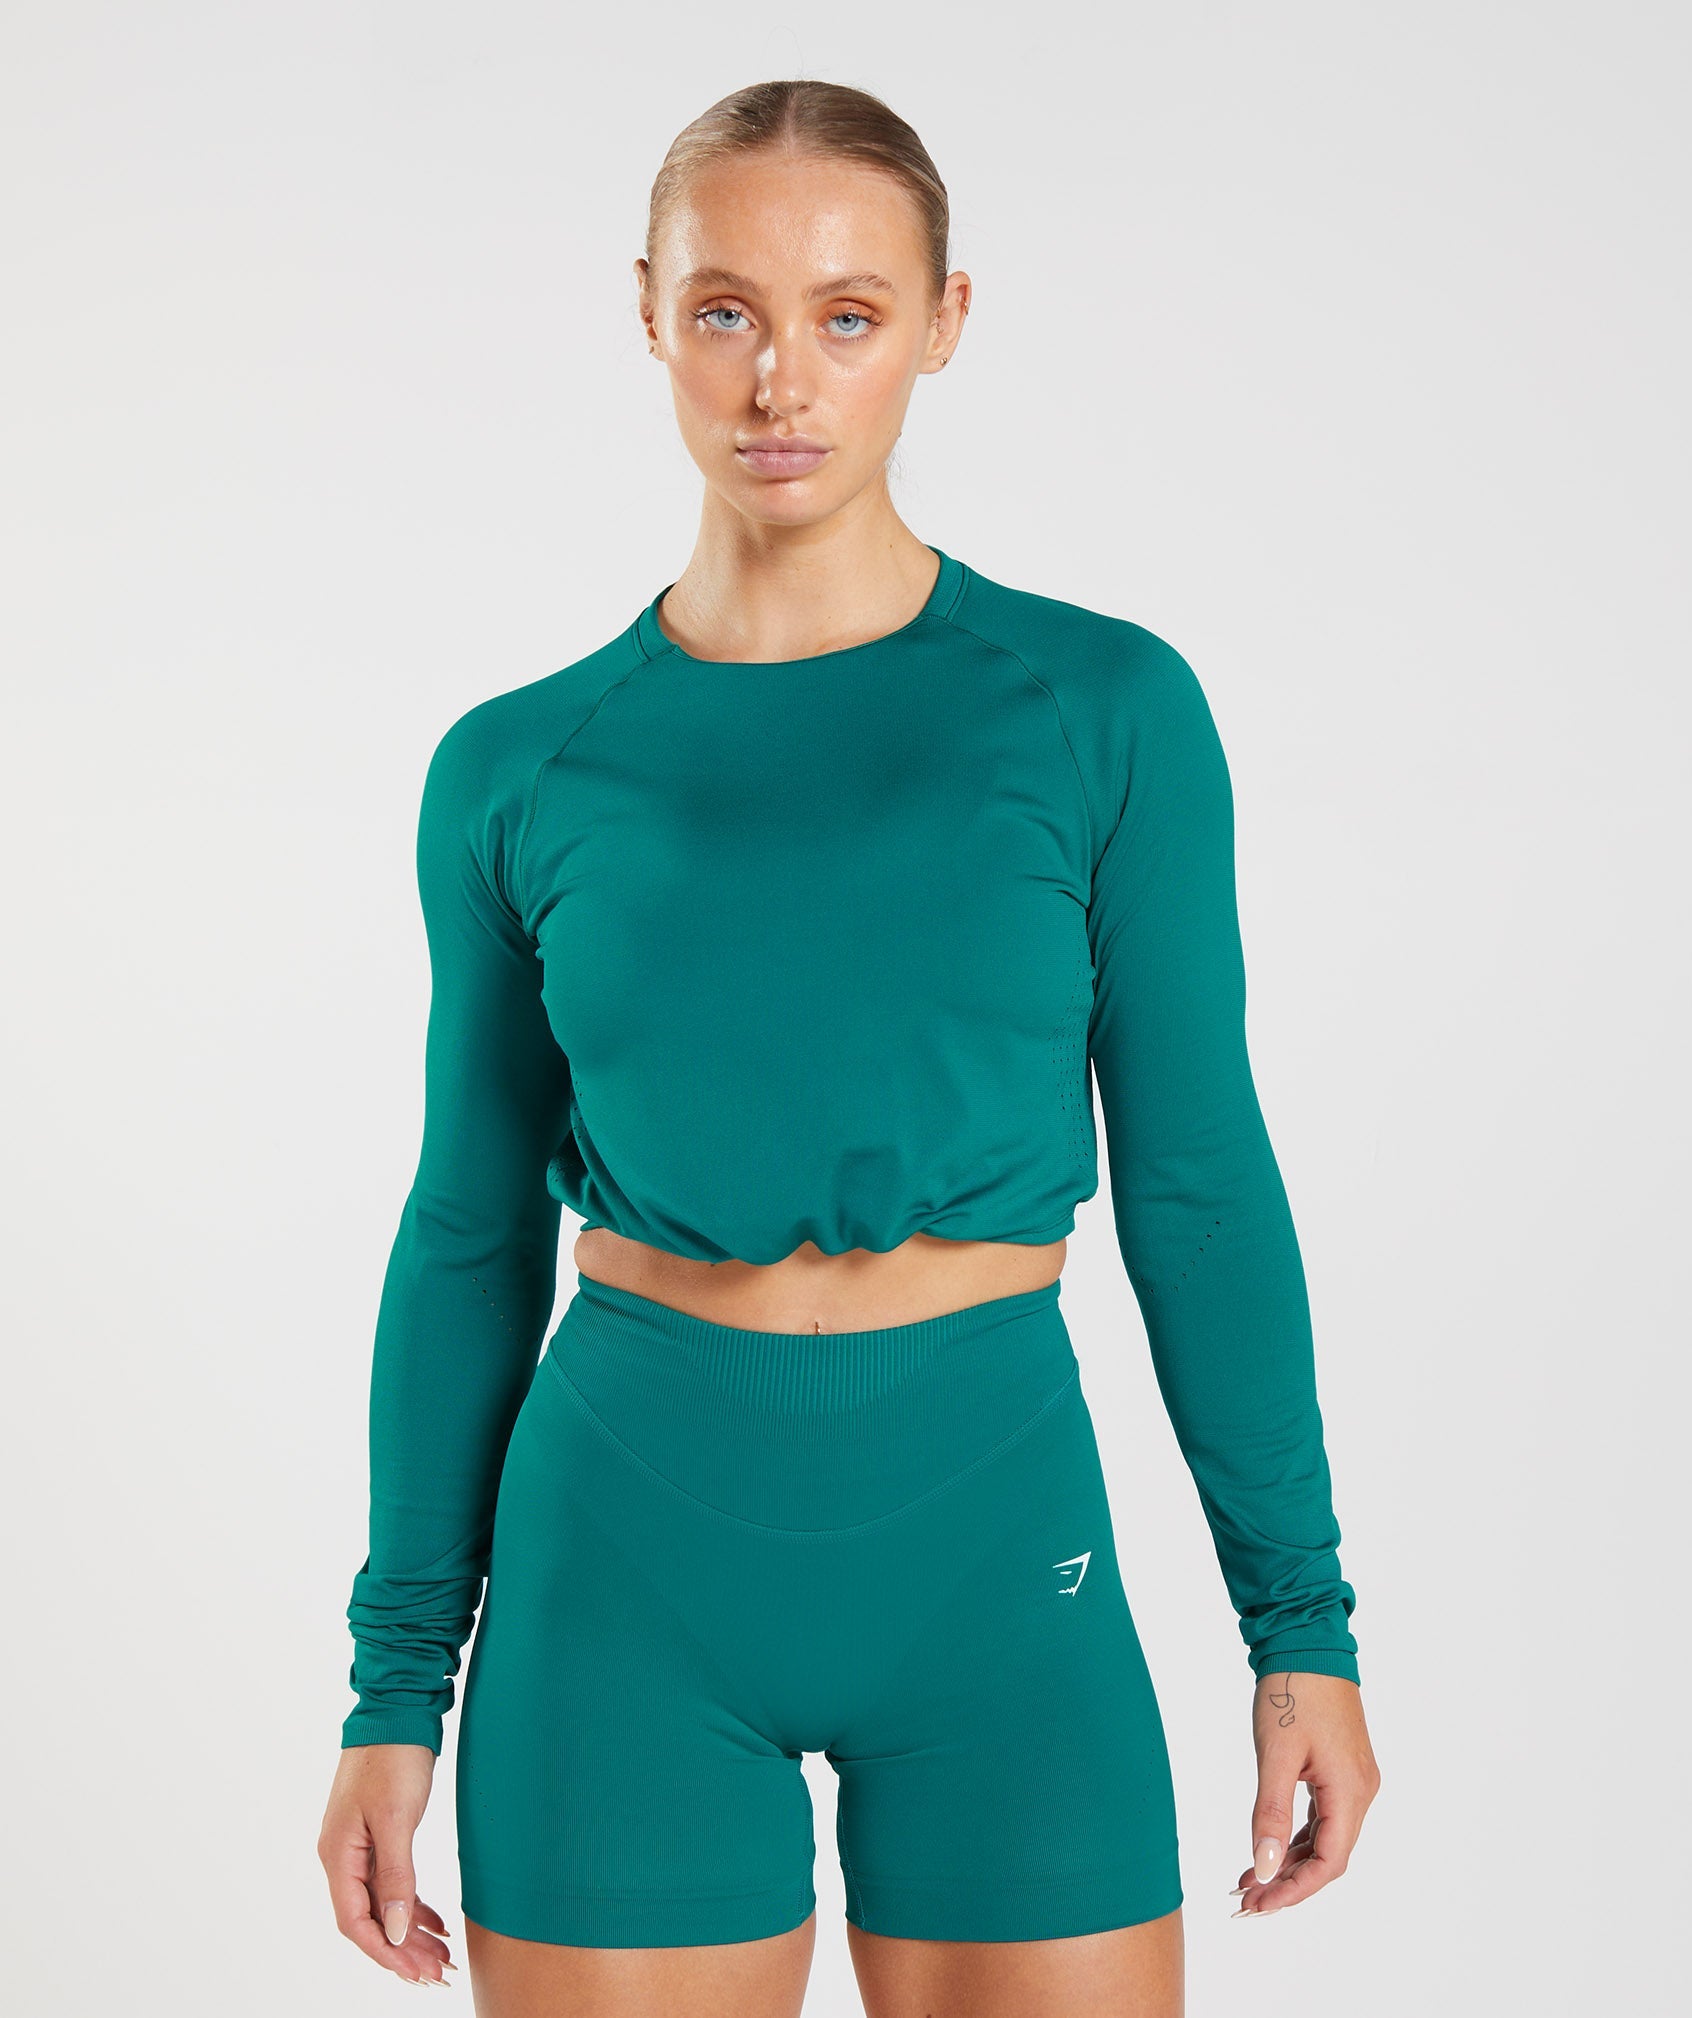 Gymshark Flex Sports Long Sleeve Crop Top Black - $20 (50% Off Retail) -  From Julia